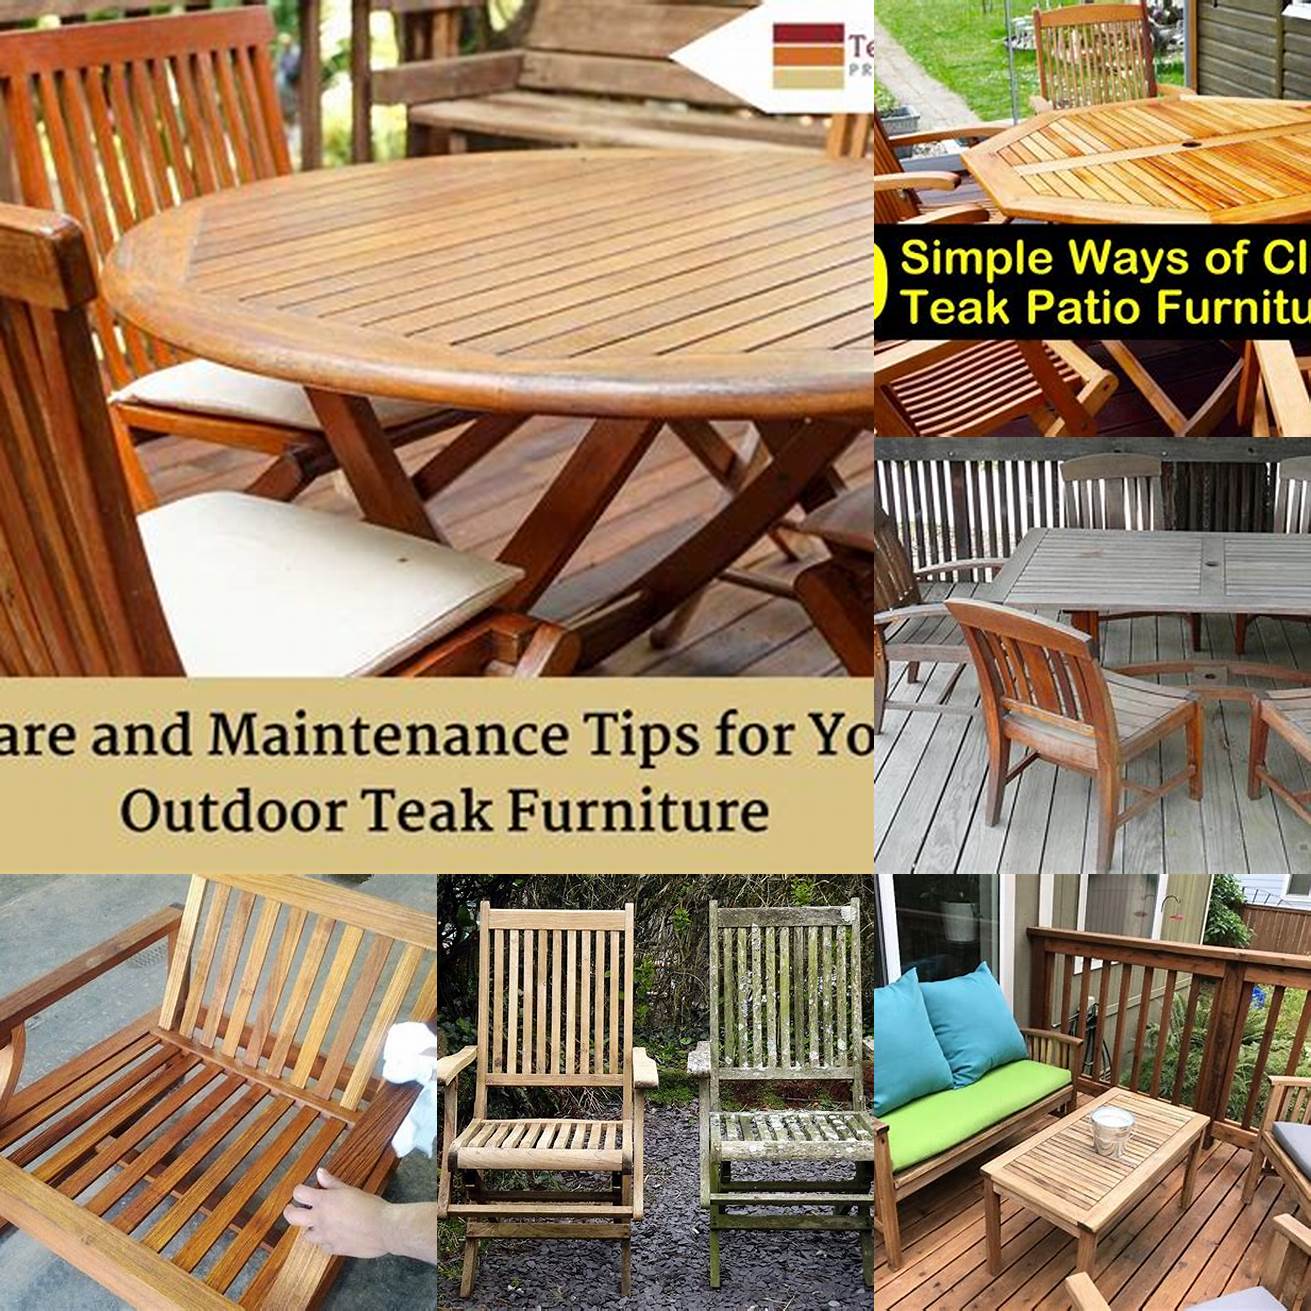 Maintenance Tips for Teak Patio Furniture